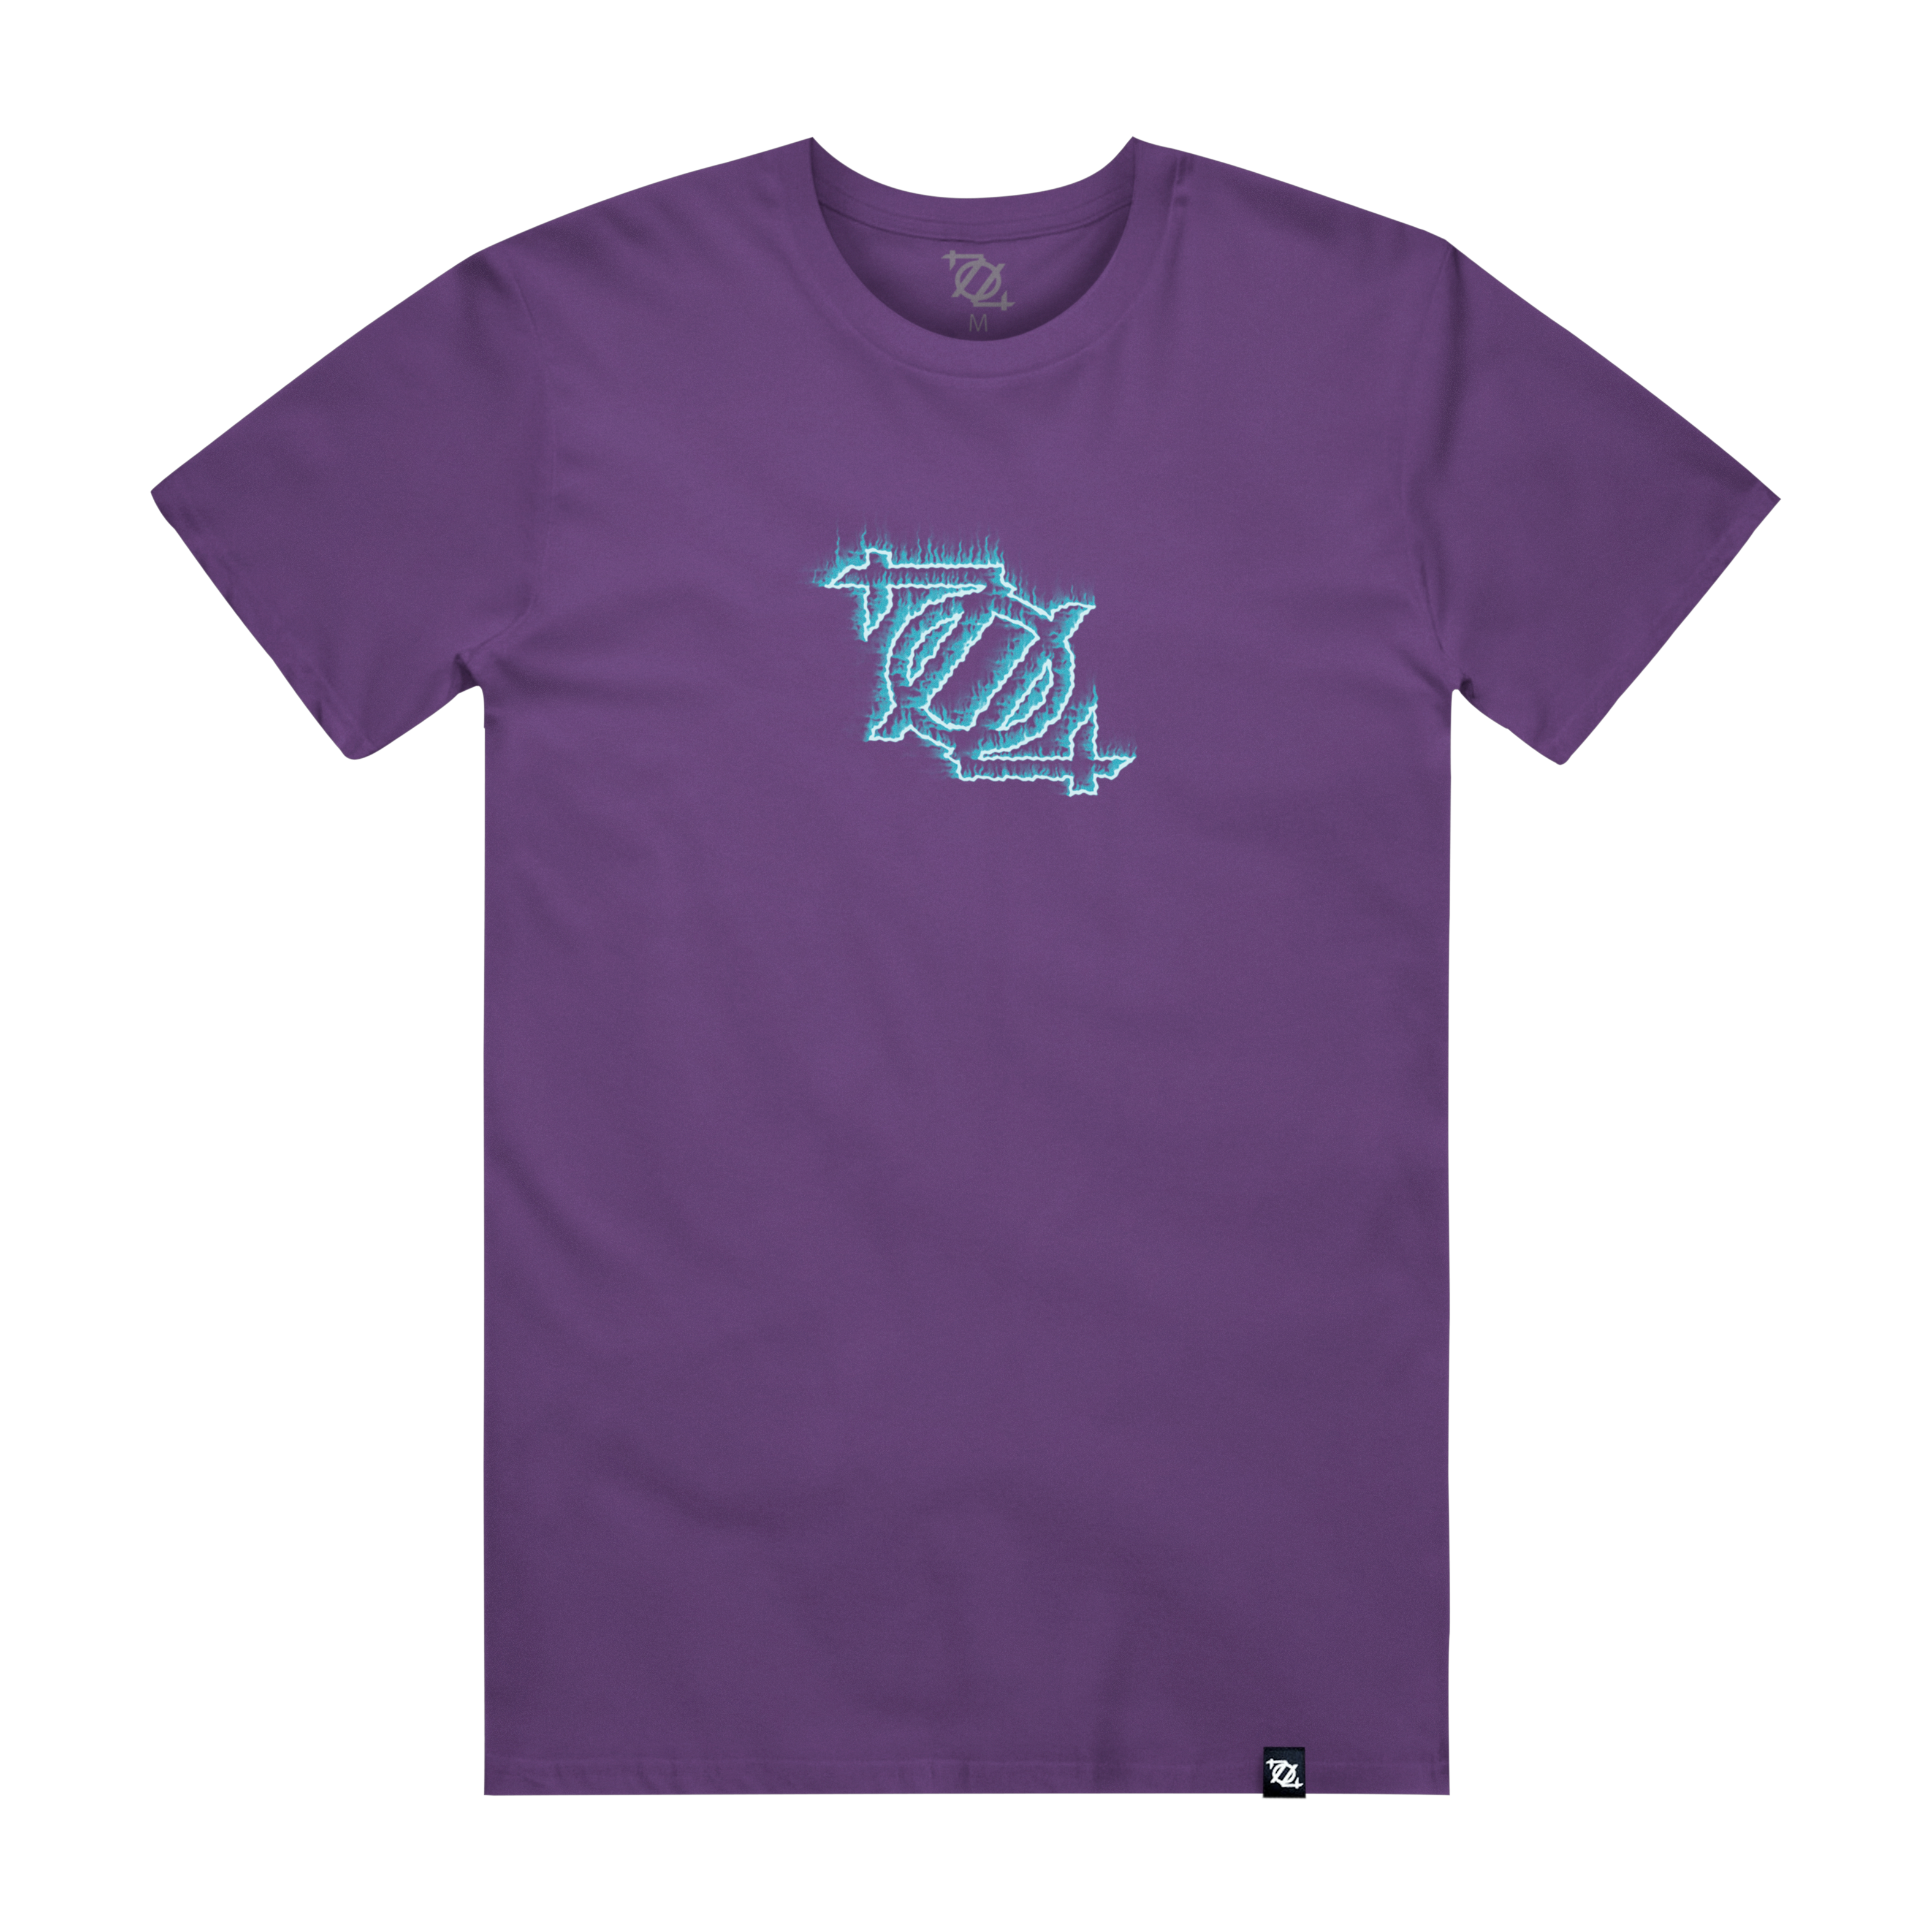 704 Shop 704 Flame Logo Tee - Purple/Teal (Unisex)